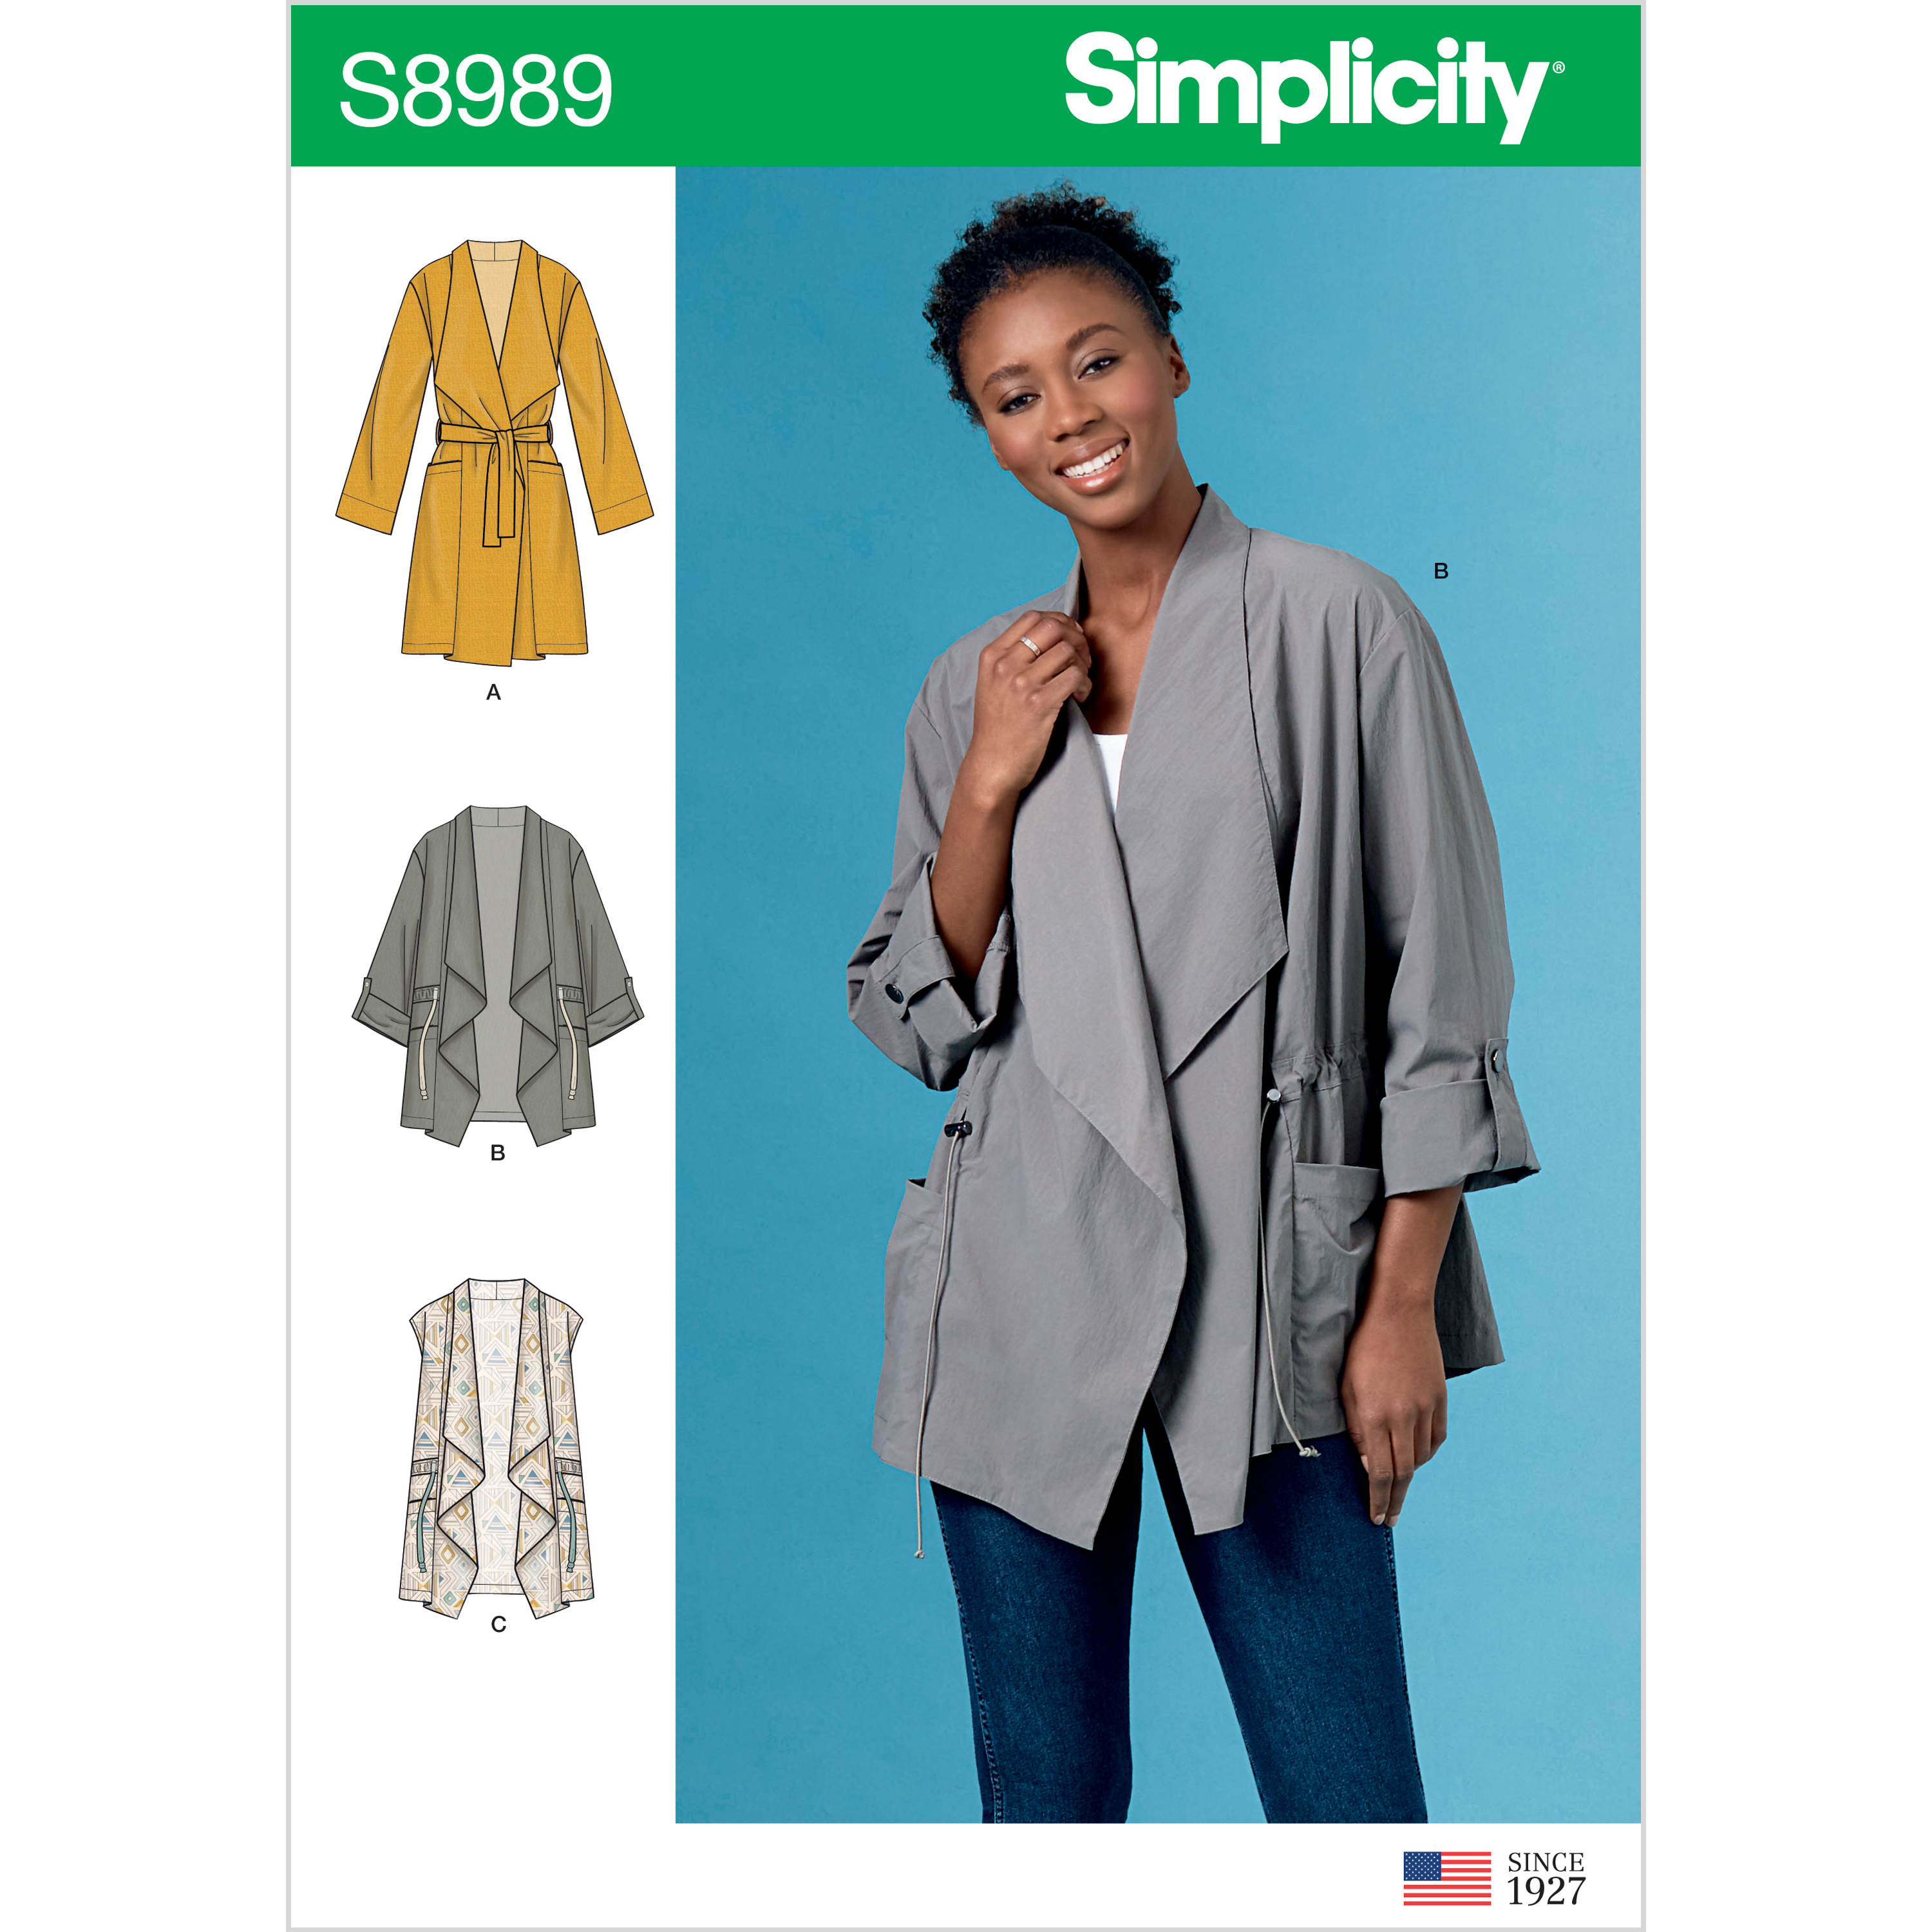 Simplicity 8989 Misses' Jacket, Coat and Vest